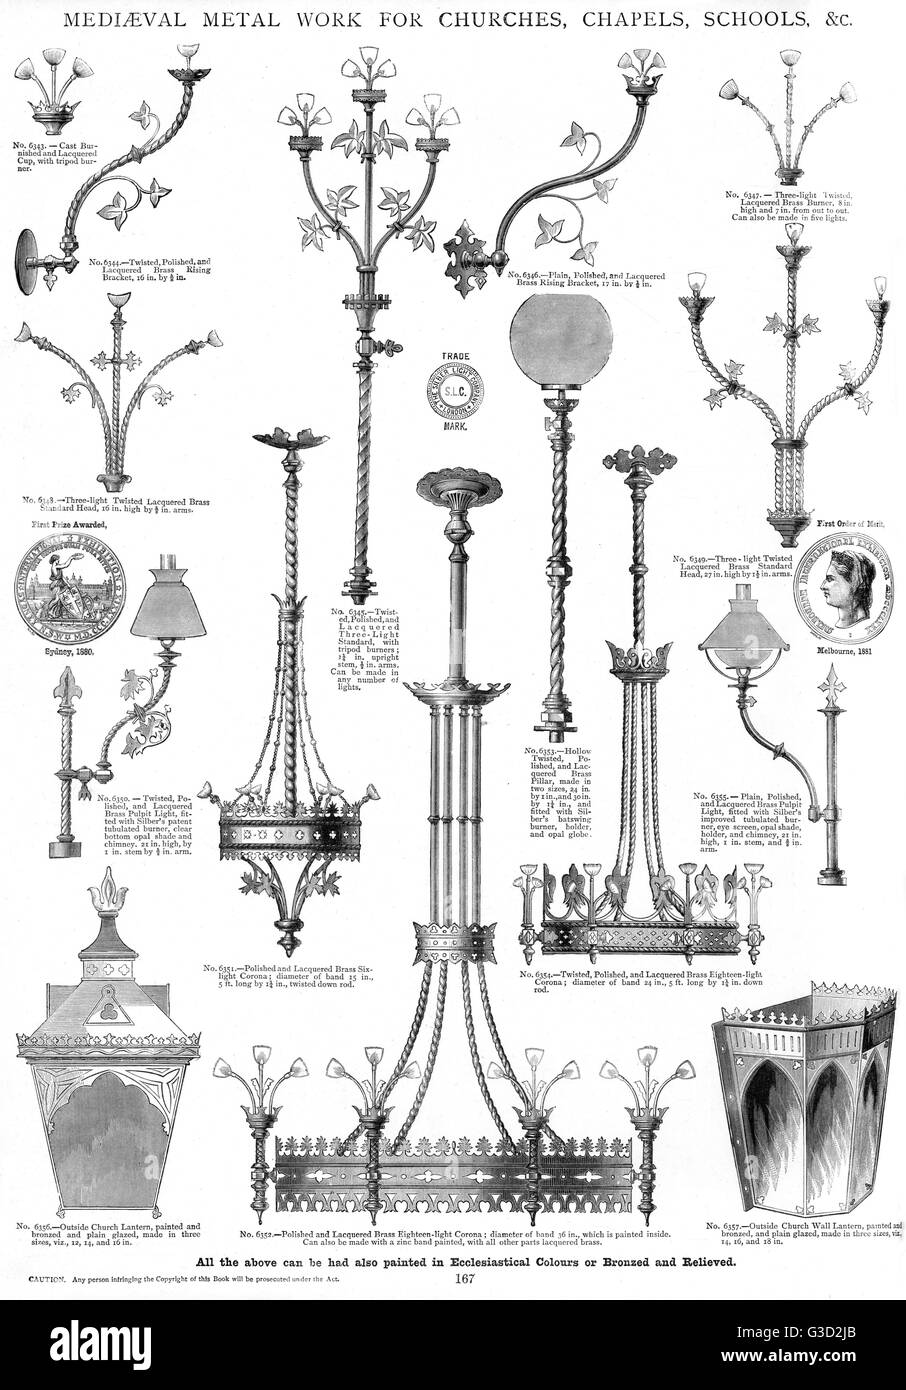 Metalurgia medieval para iglesias, capillas, escuelas, Placa 167 Foto de stock